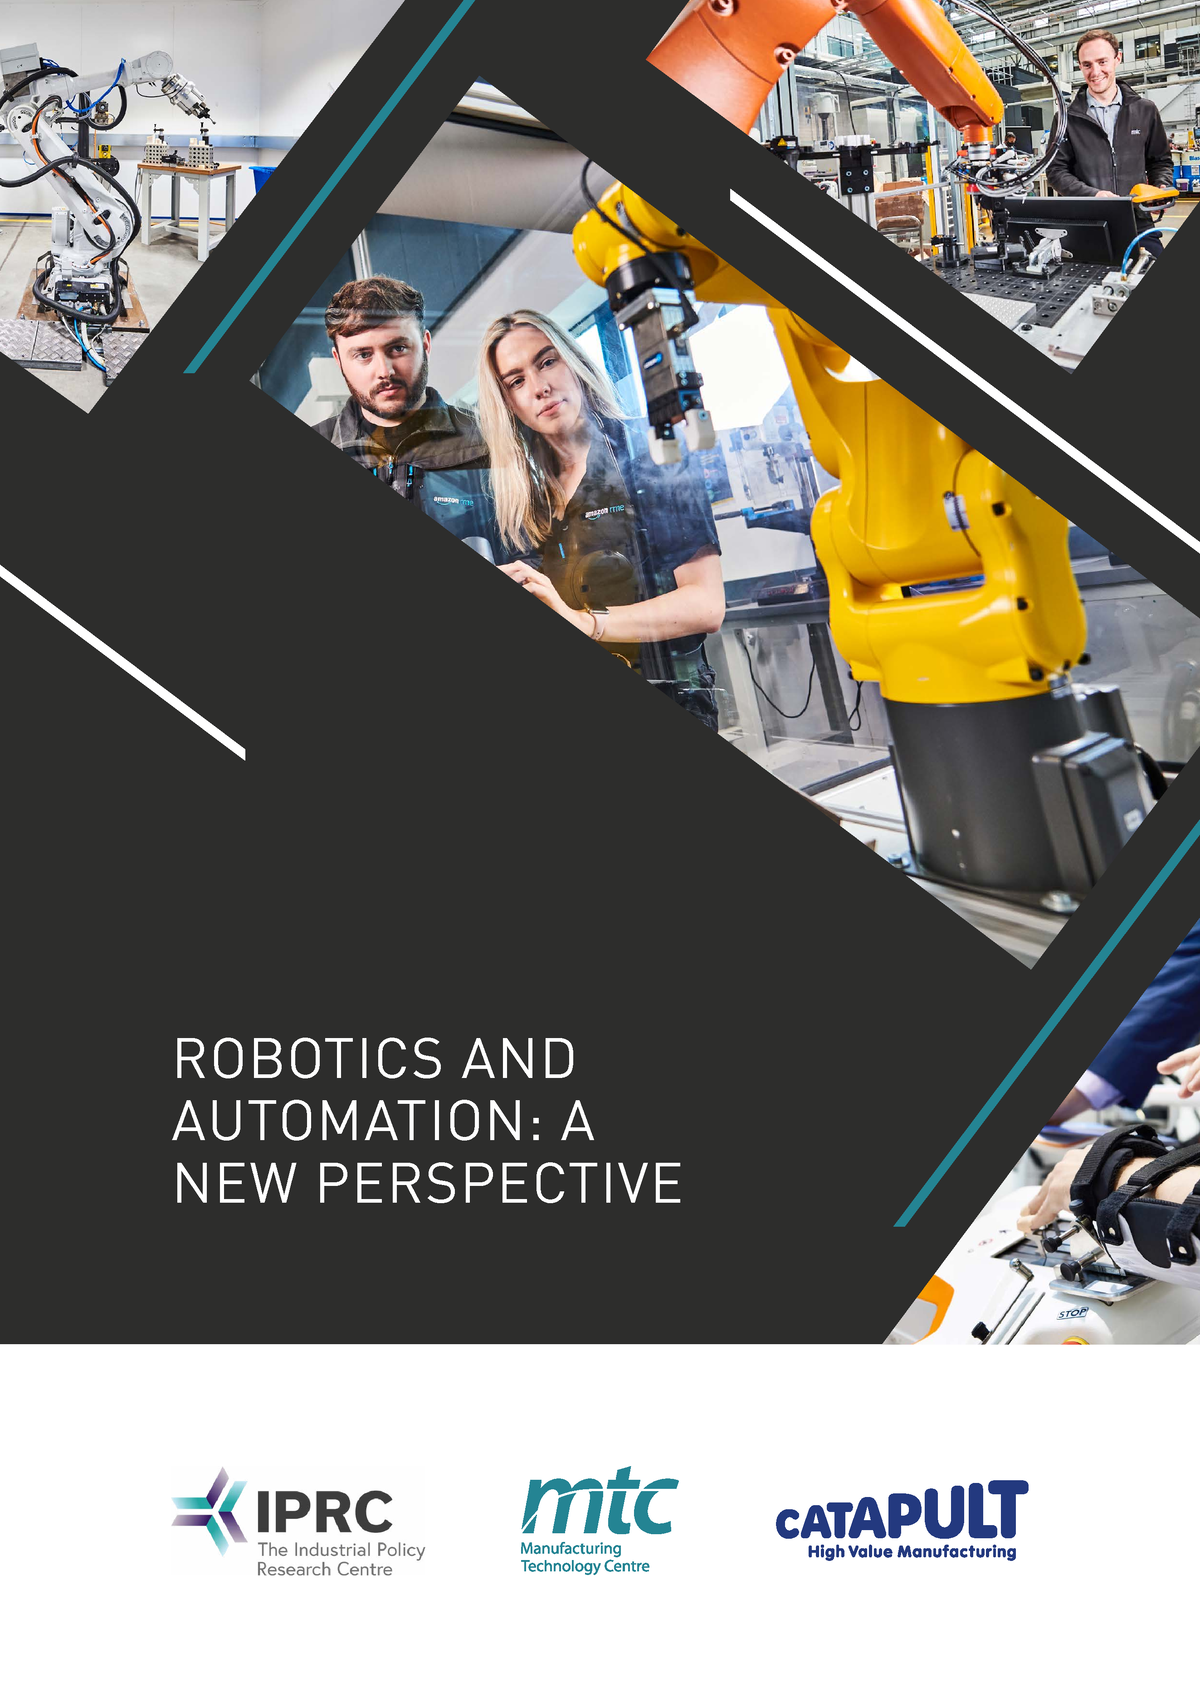 paper presentation on robotics and automation